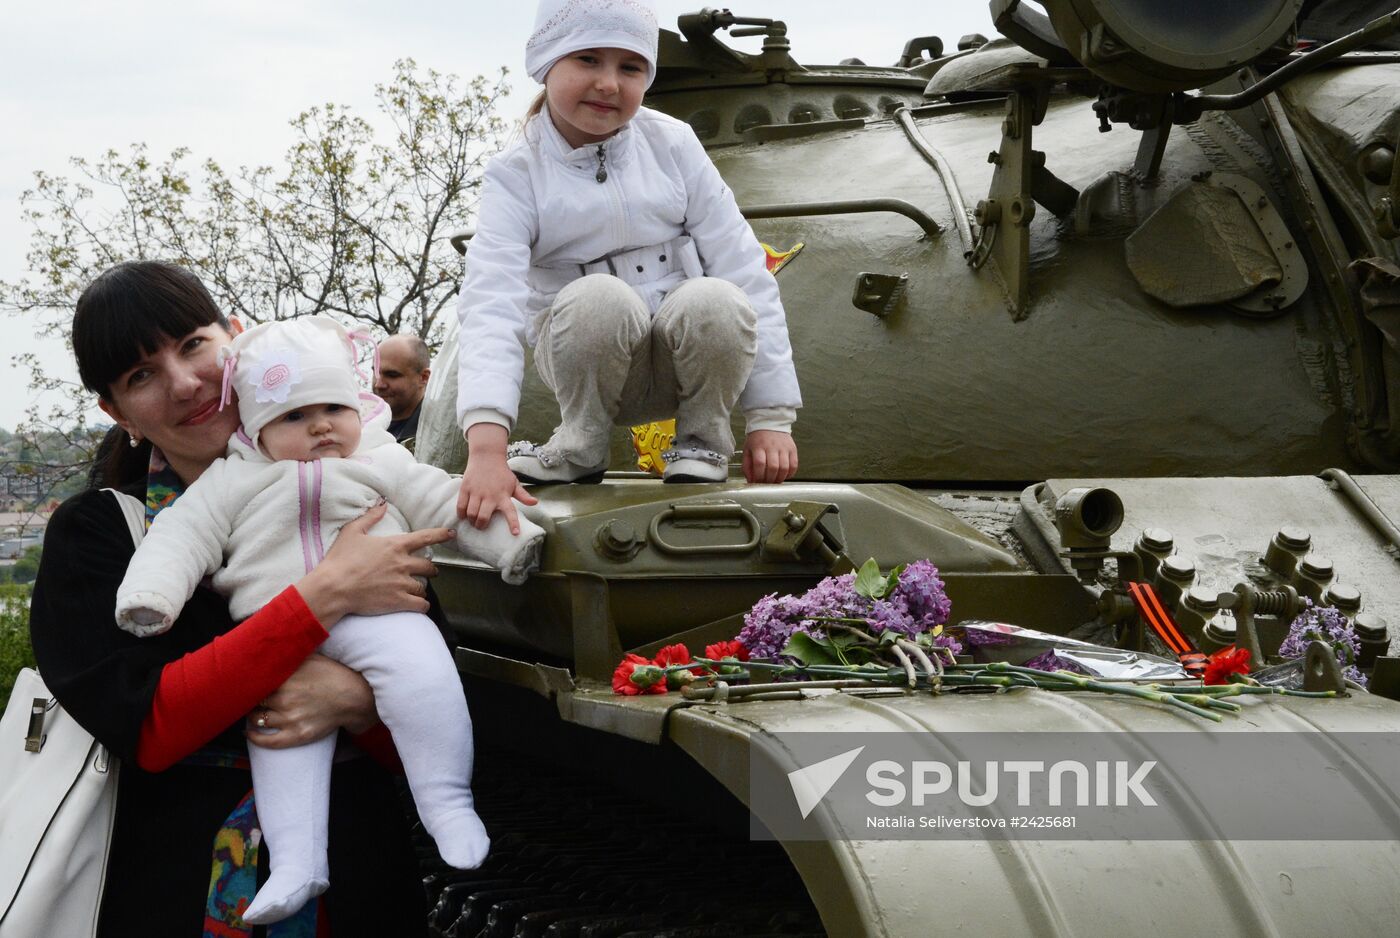 Donetsk celebrates Victory Day